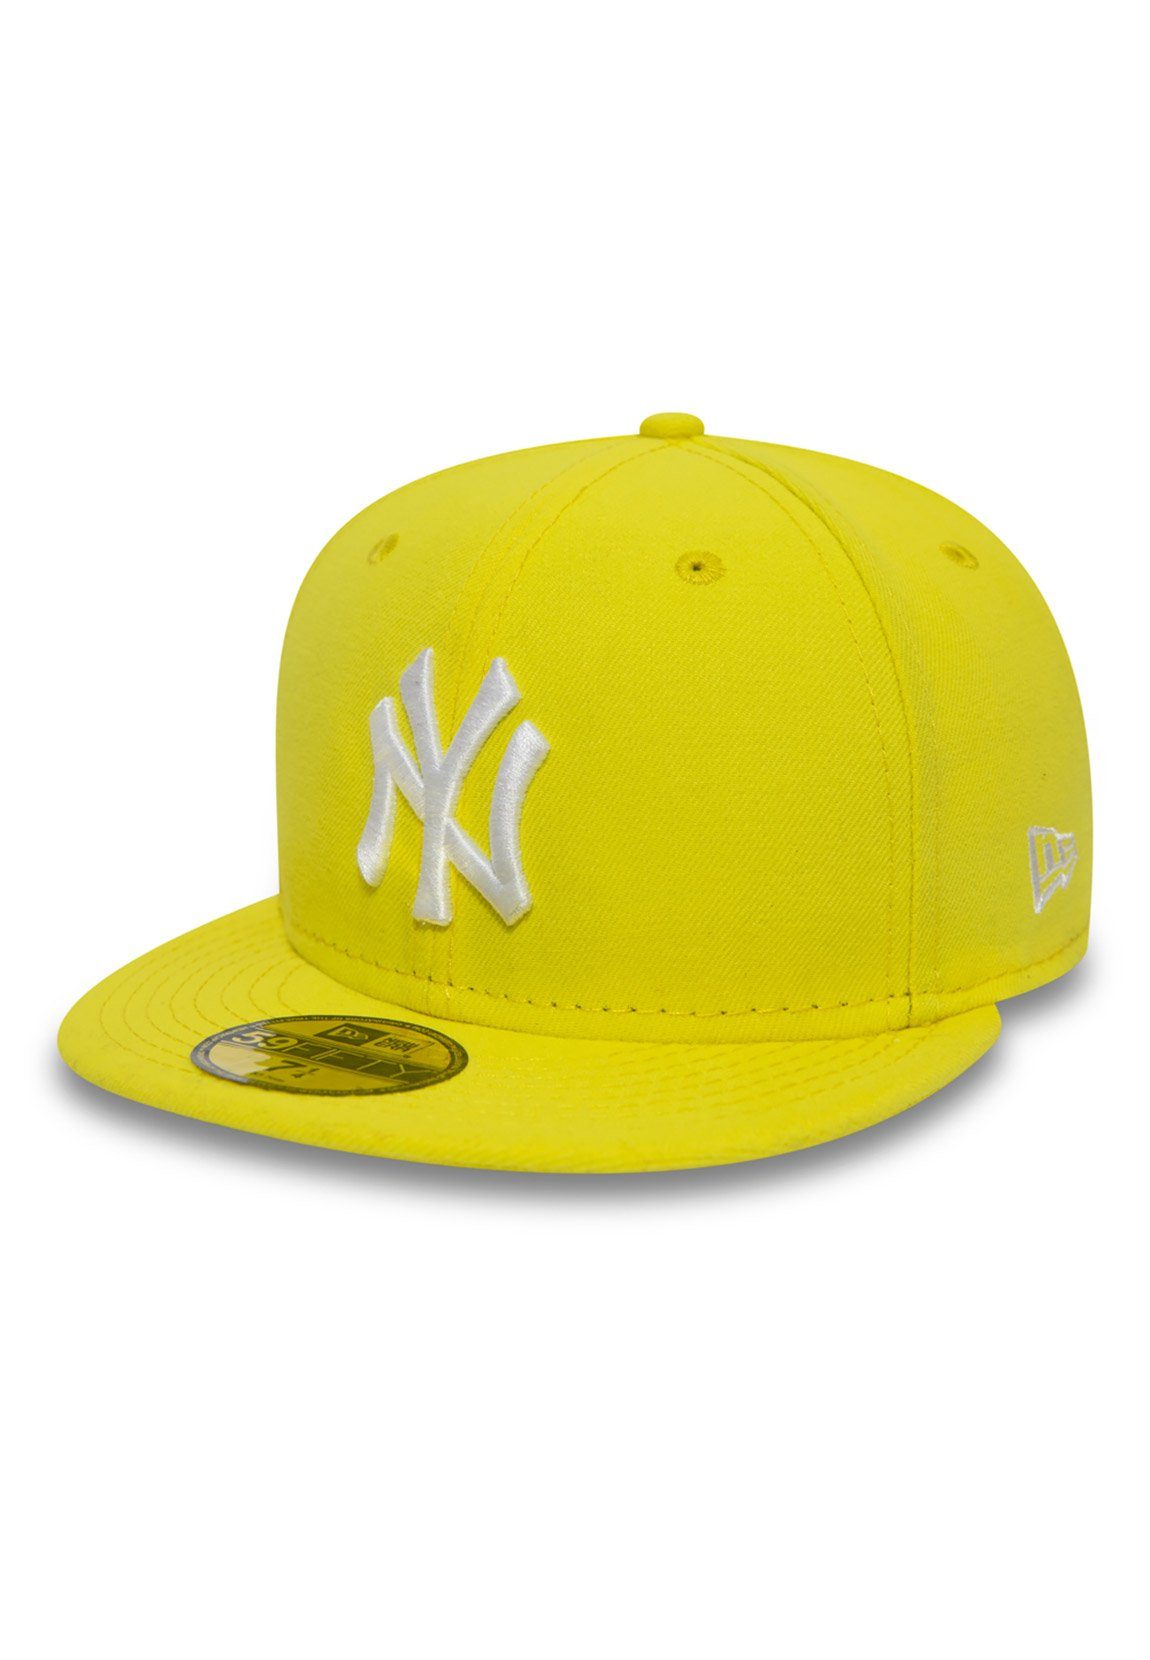 Basic Fitted NY Era New New Cap YANKEES MLB 59Fifty Era Gelb Cap